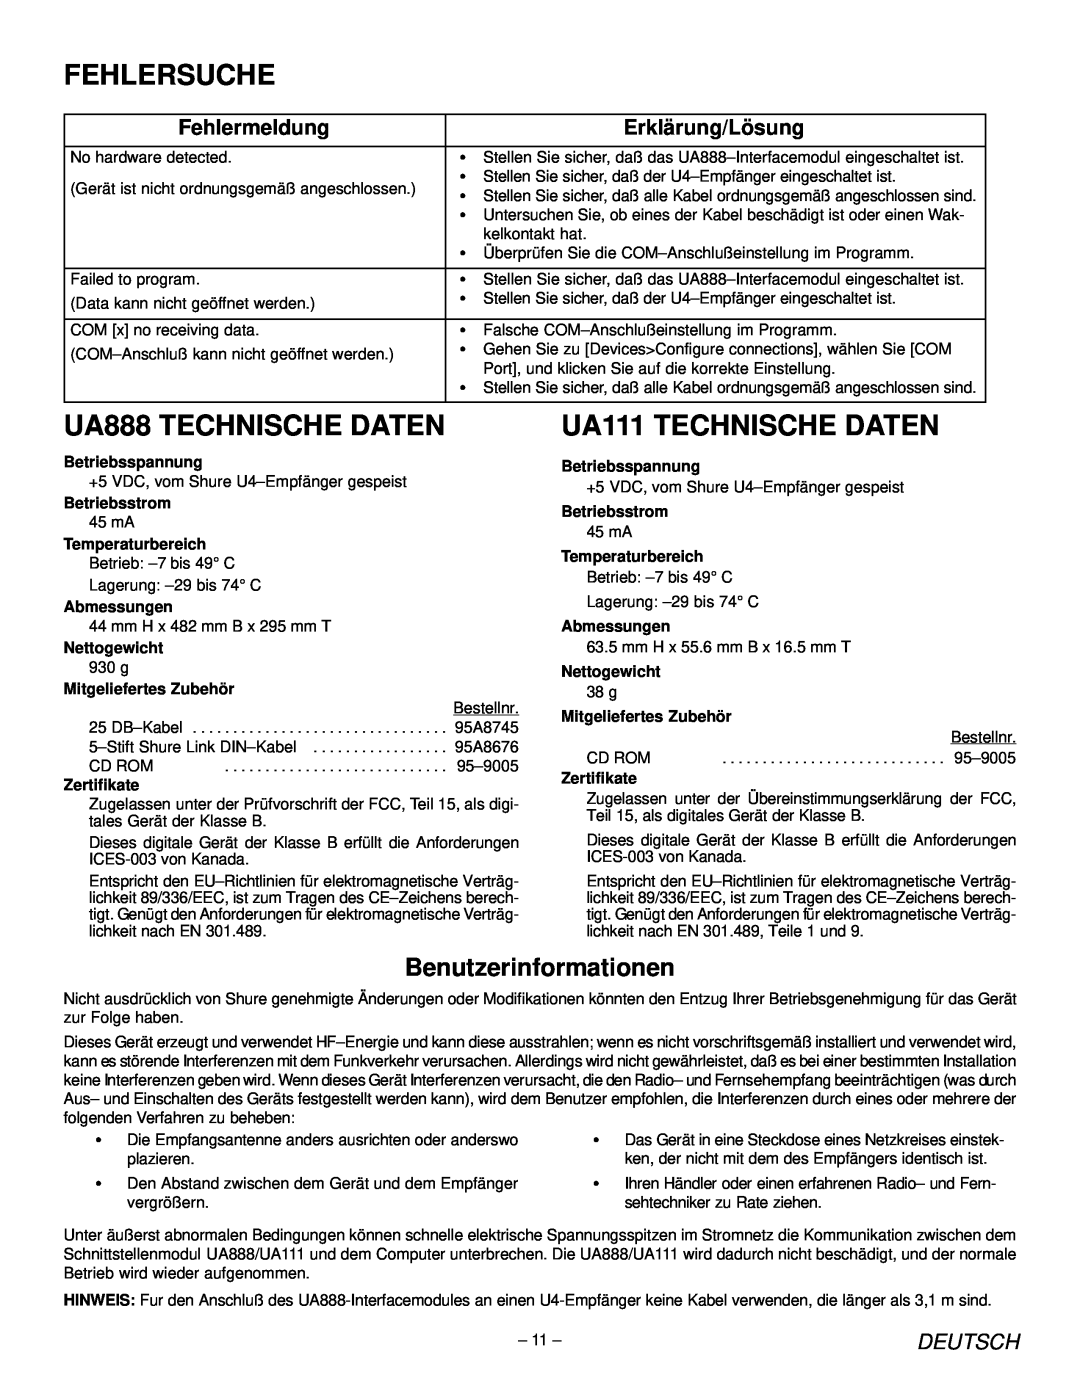 Shure manual Fehlersuche, UA888 TECHNISCHE DATEN, UA111 TECHNISCHE DATEN, Benutzerinformationen, Fehlermeldung, Deutsch 